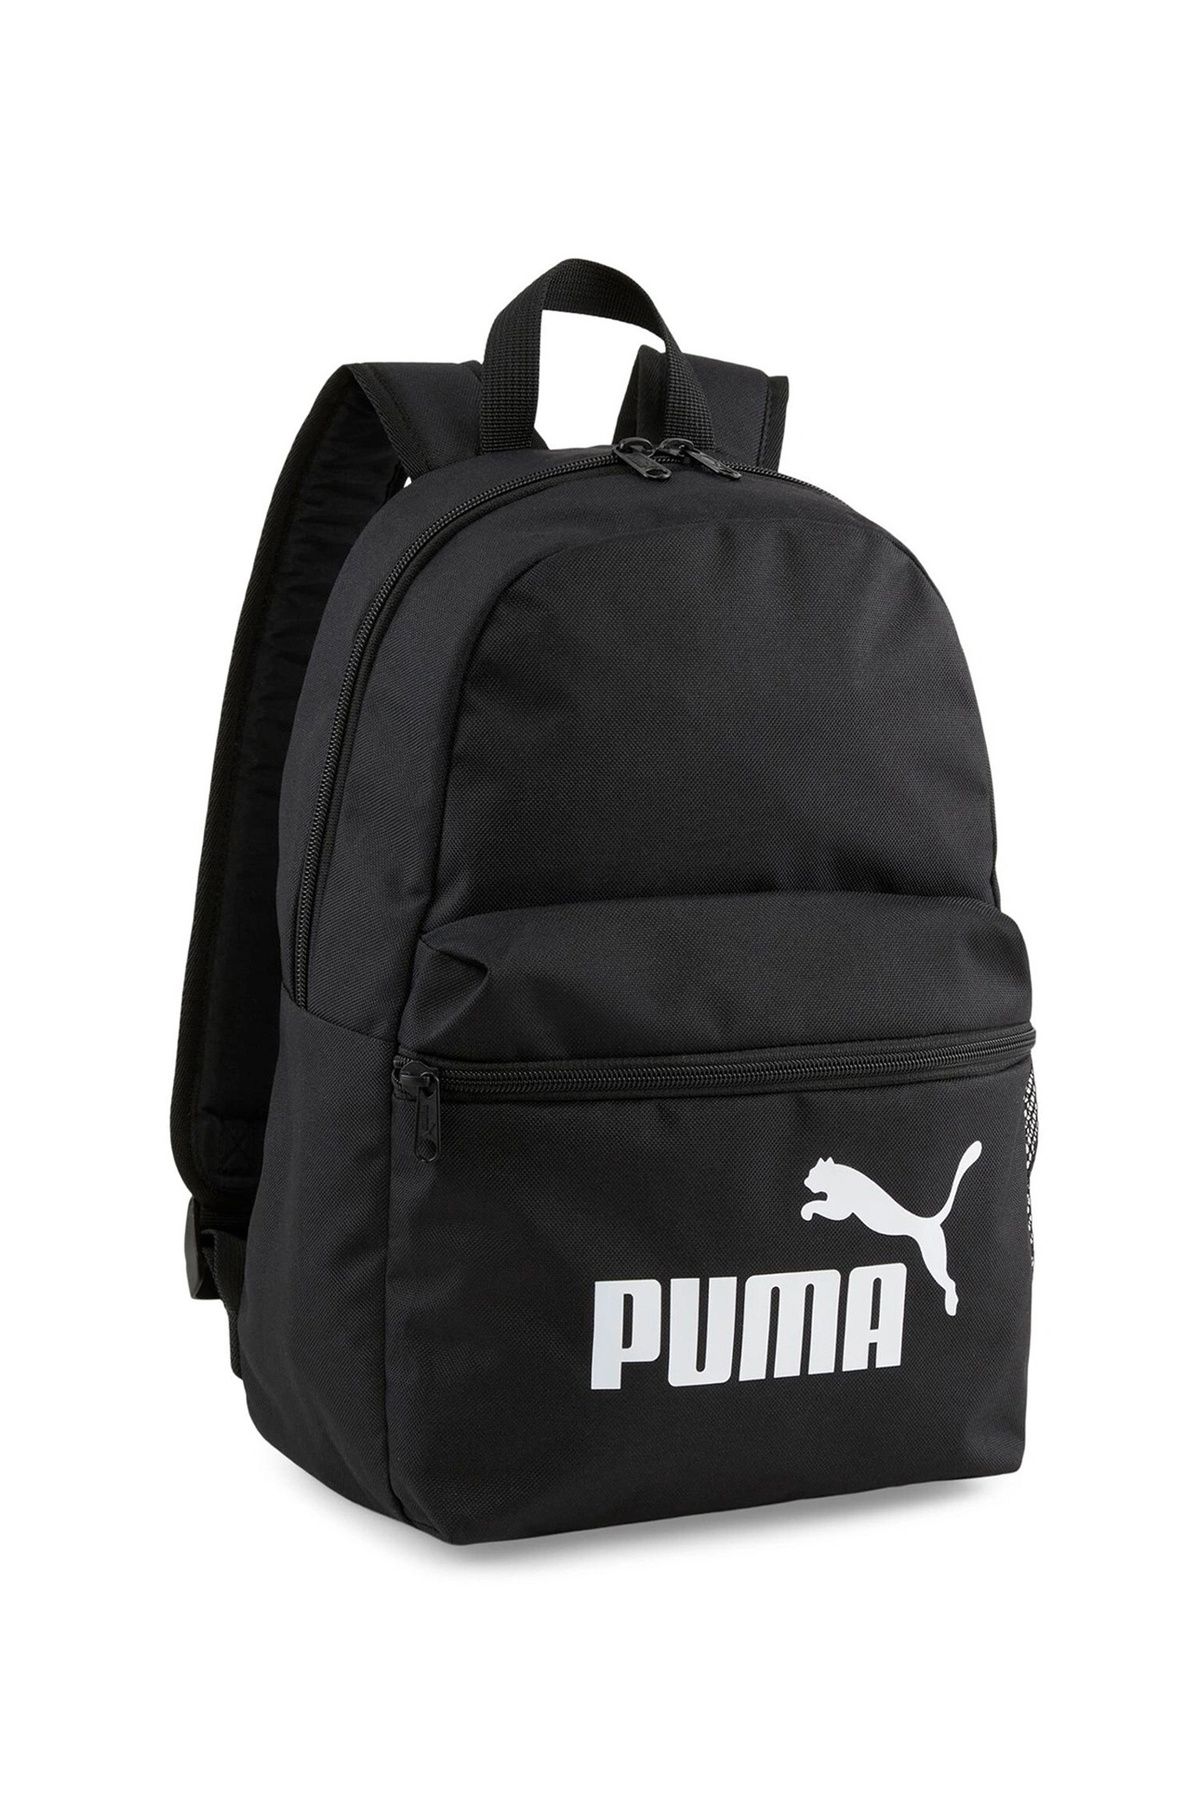 Puma Siyah - Beyaz Çocuk Sırt Çantası 7987901 PUMA Phase Small Backpack